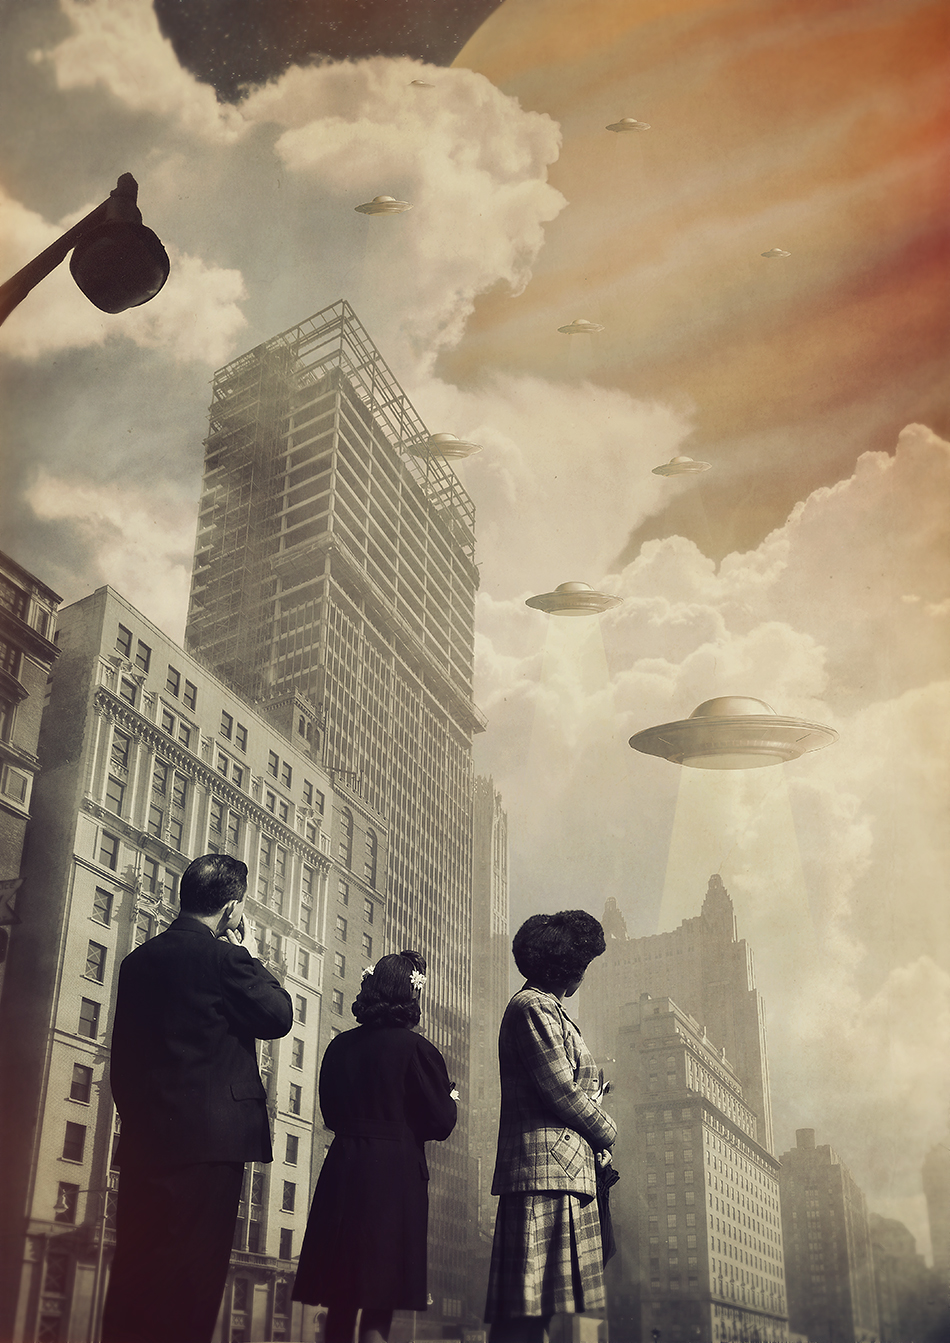 Invasion - Collage Art by Joseba Elorza